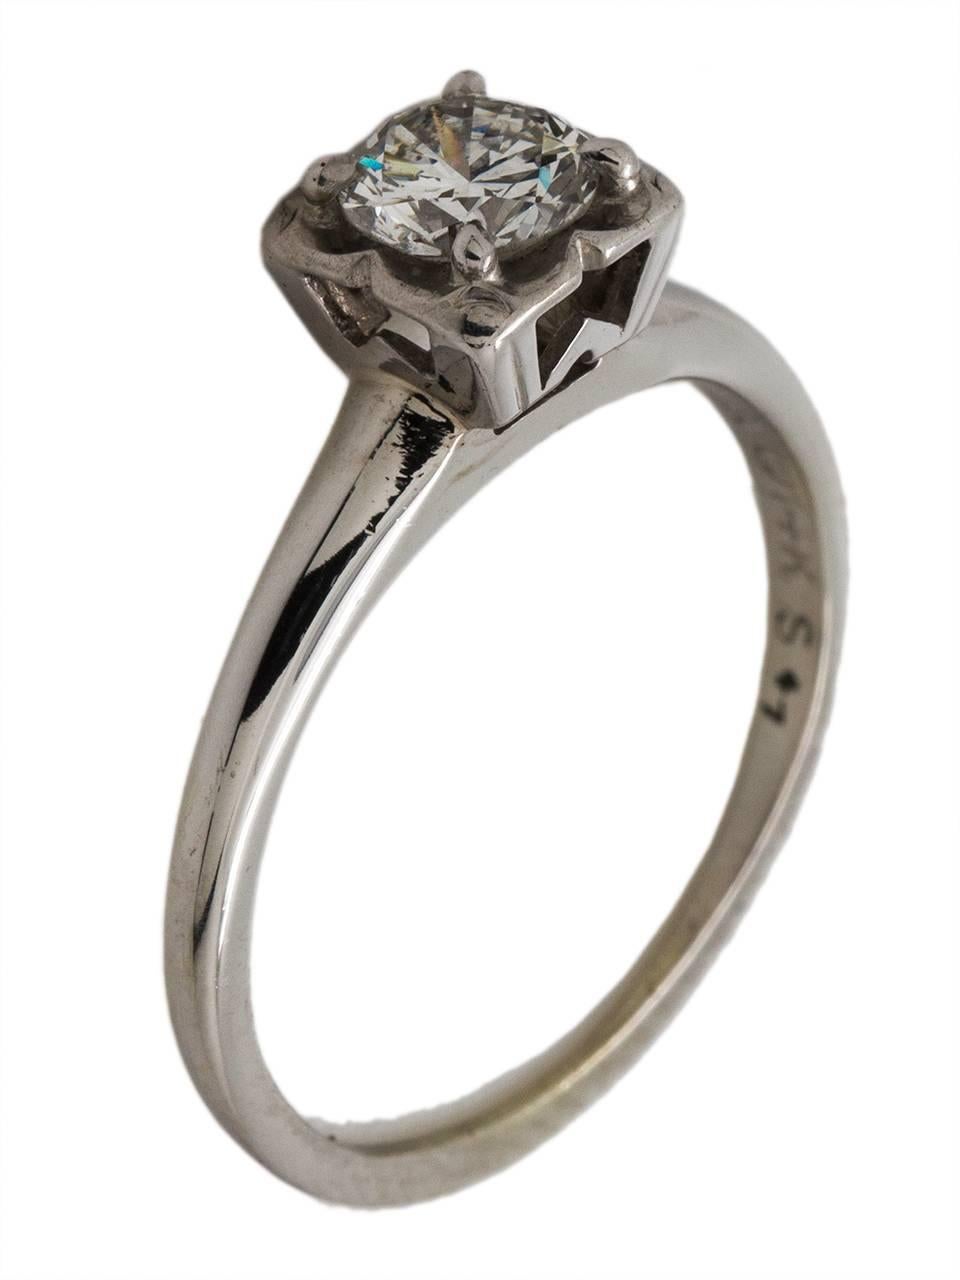 0.40 carat diamond ring